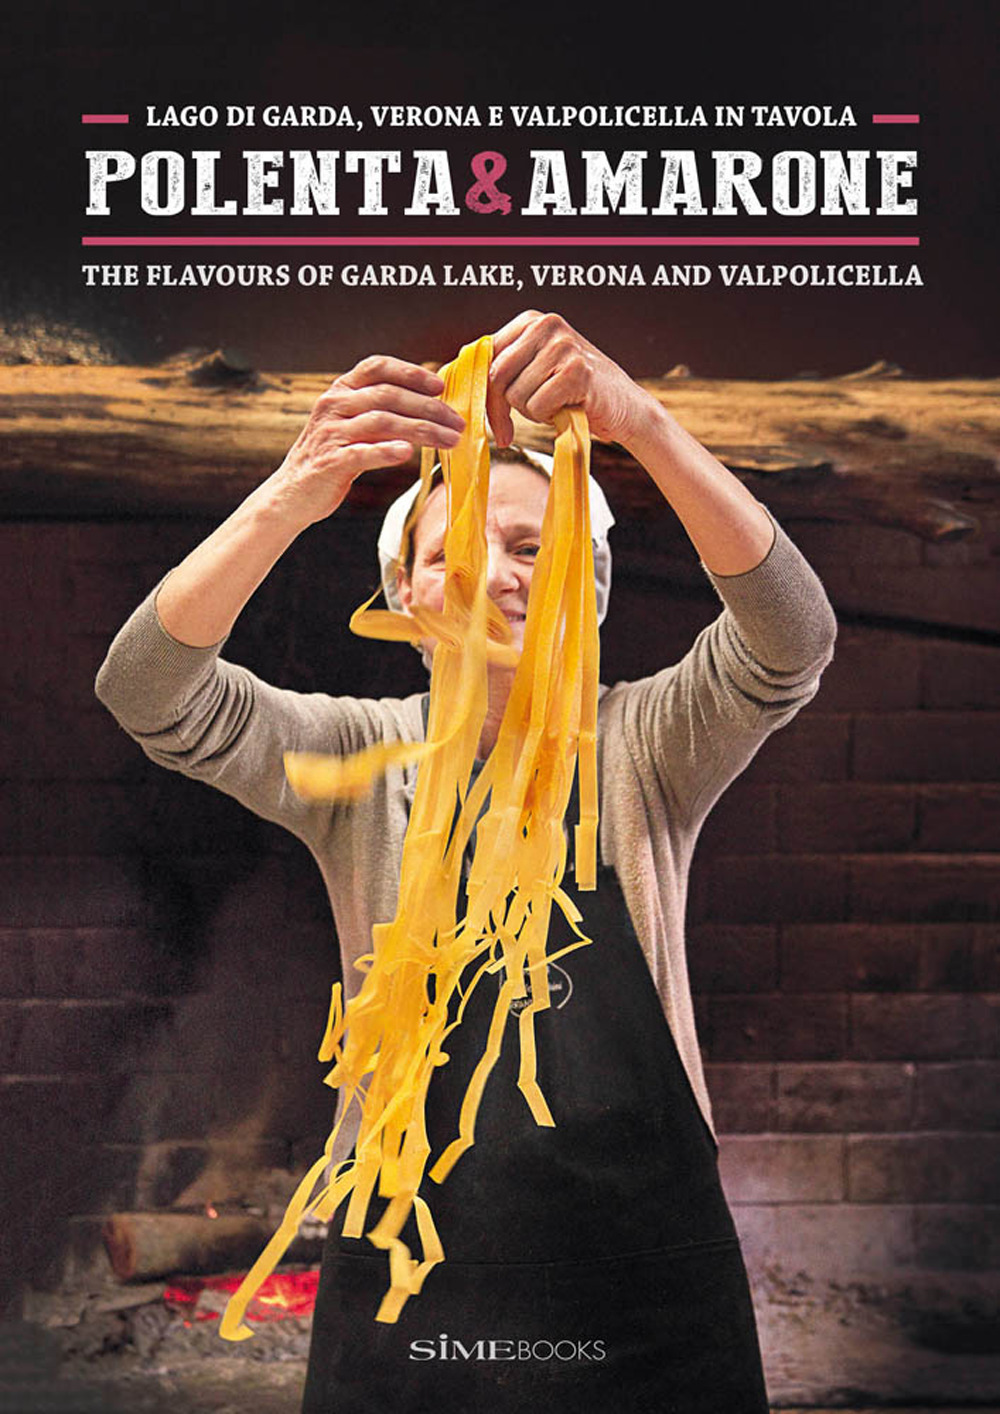 Polenta & Amarone. Lago di Garda, Verona e Valpolicella in tavola-The flavours of Garda lake, Verona and Valpolicella